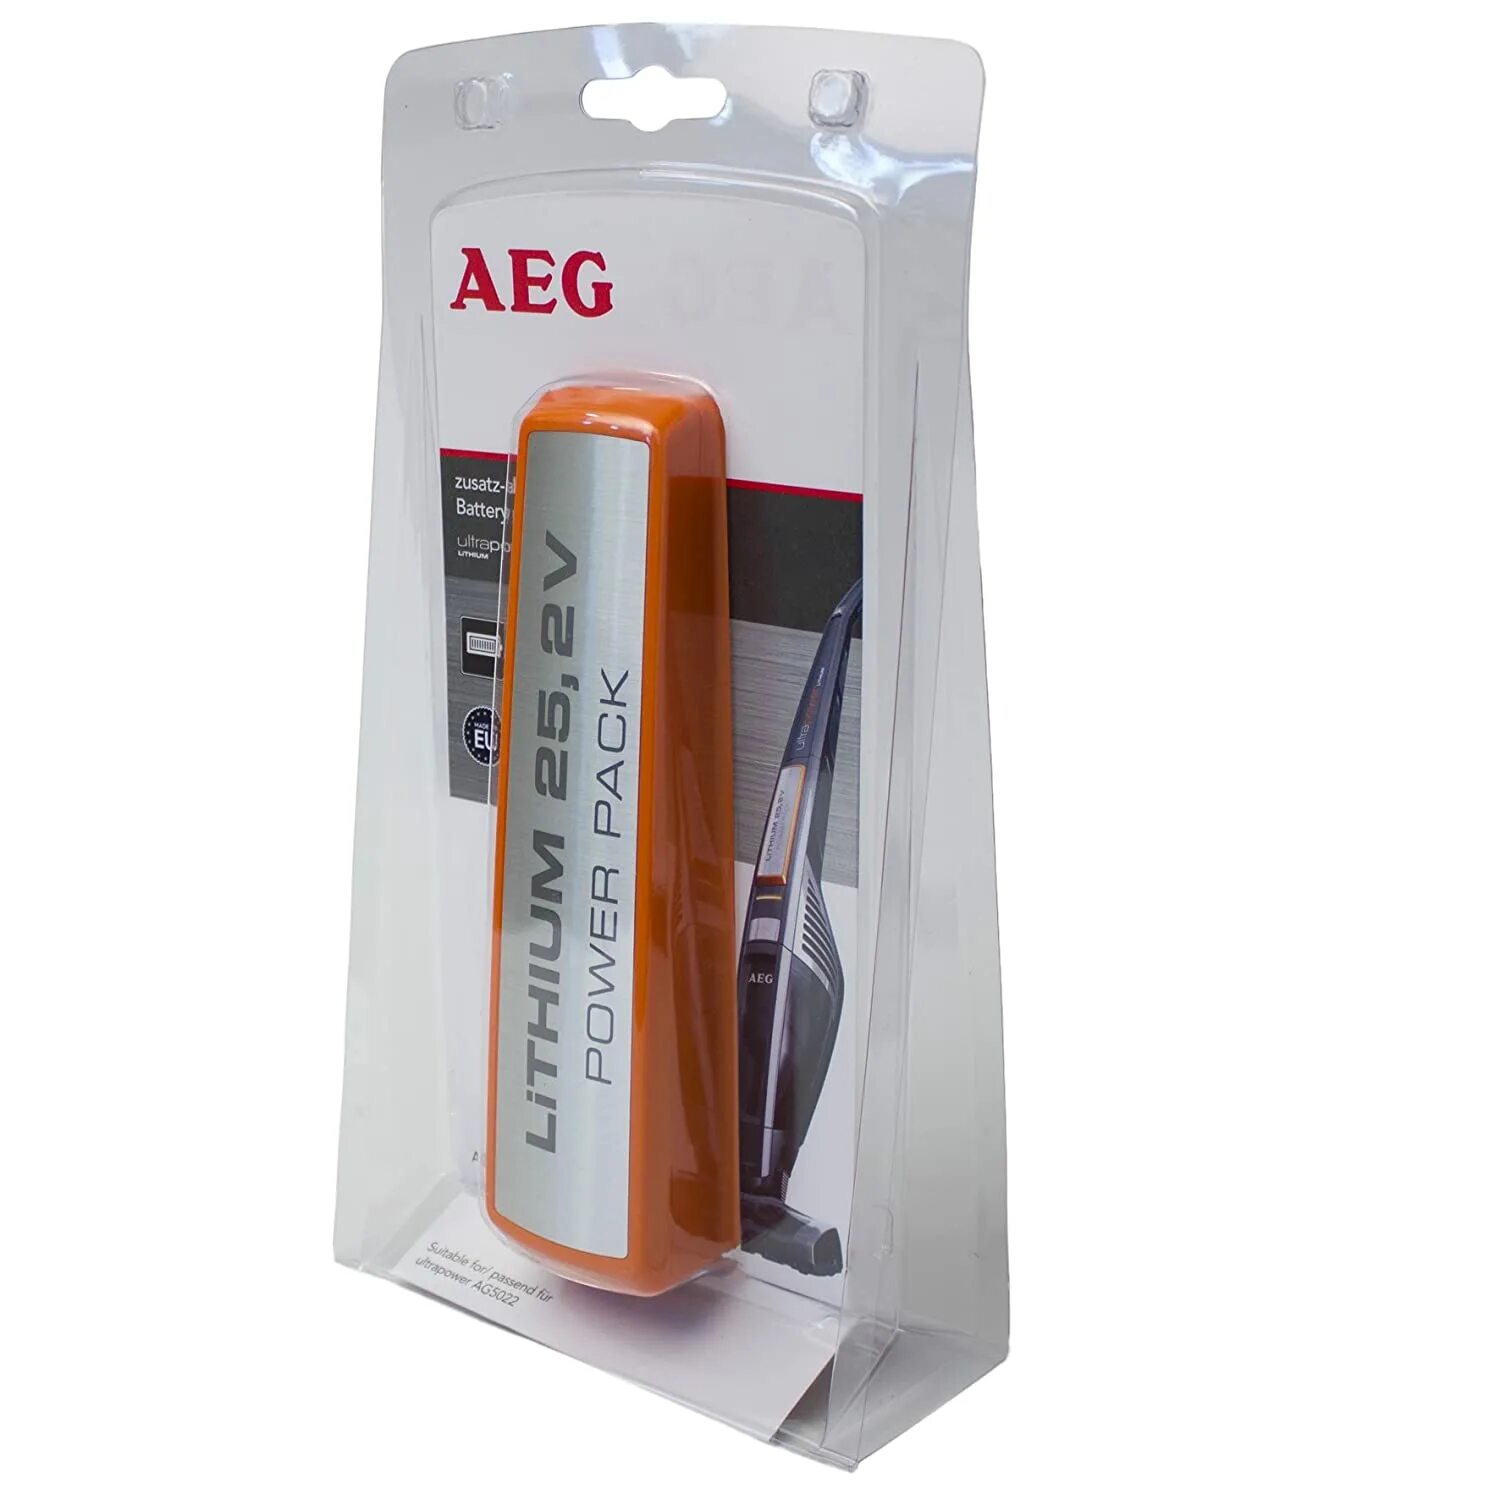 Аккумулятор 25.2 v для пылесосов. Аккумуляторы (батарейки) для пылесоса AEG 25,2v 140127175614. AEG ULTRAPOWER аккумулятор. AEG, ag942 аккумулятор. Аккумулятор для пылесоса AEG.